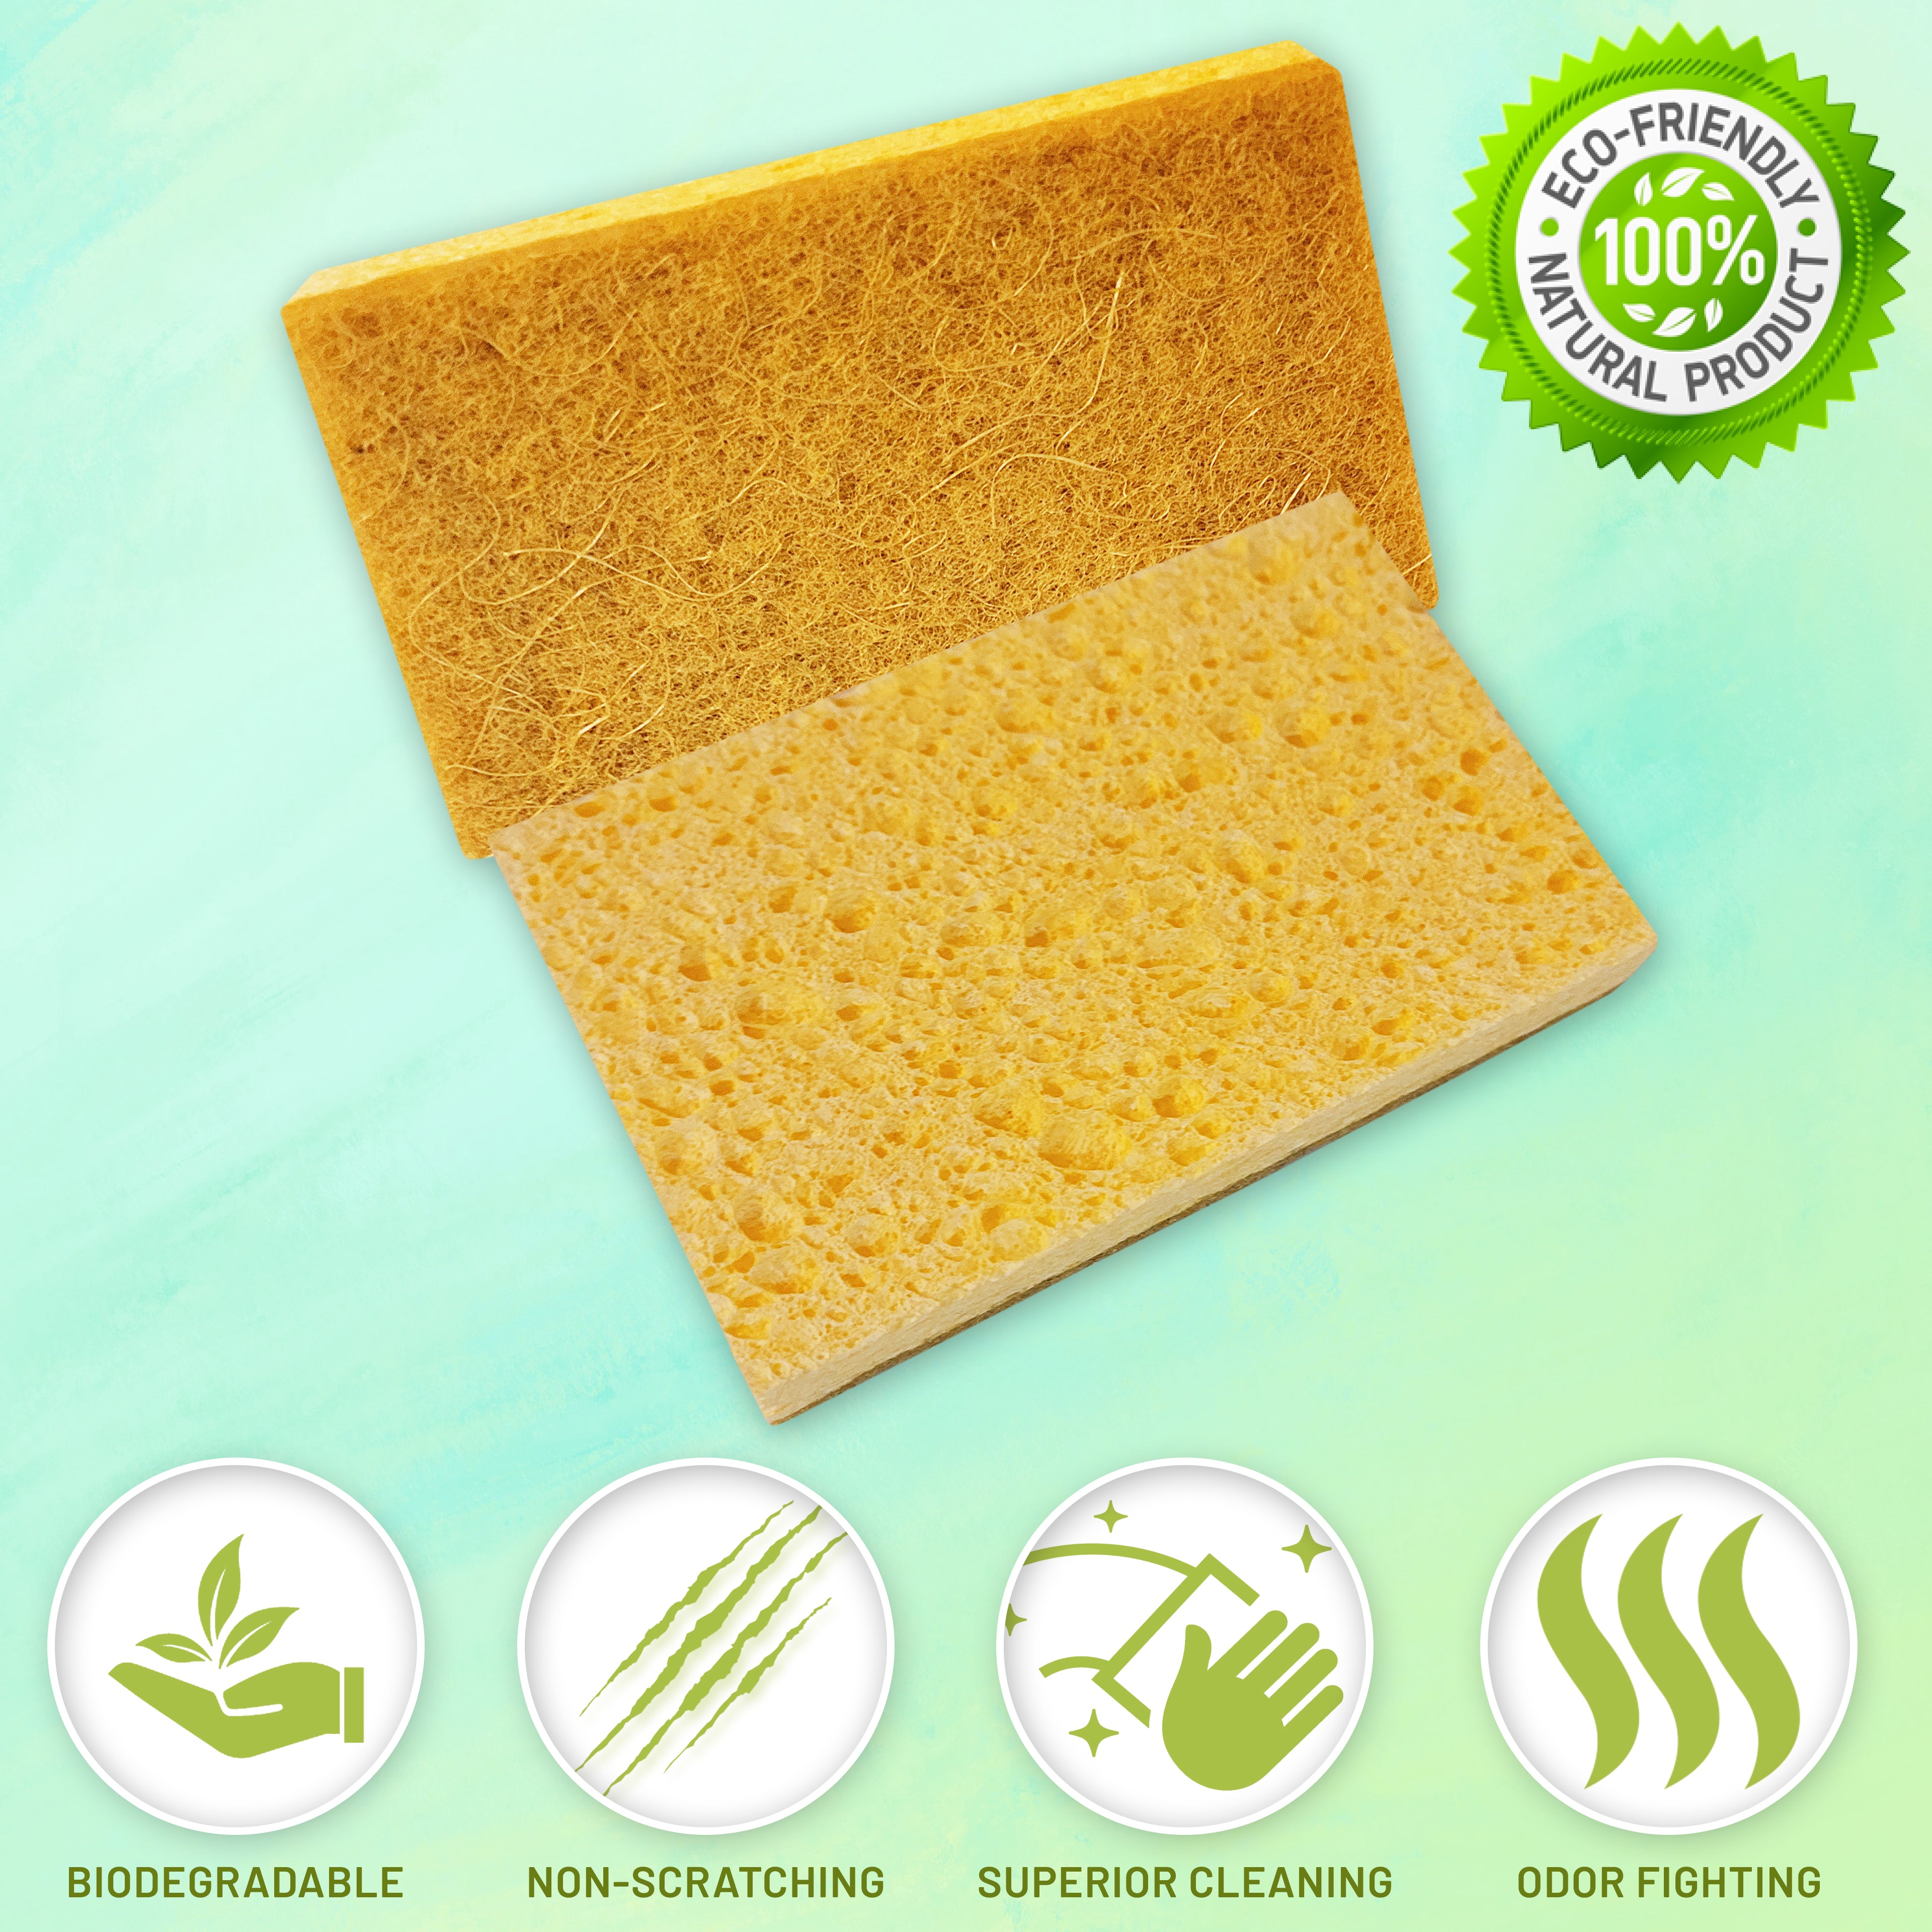 Eco-friendly All Natural Plant-based Biodegradable Sponges - 6 pk